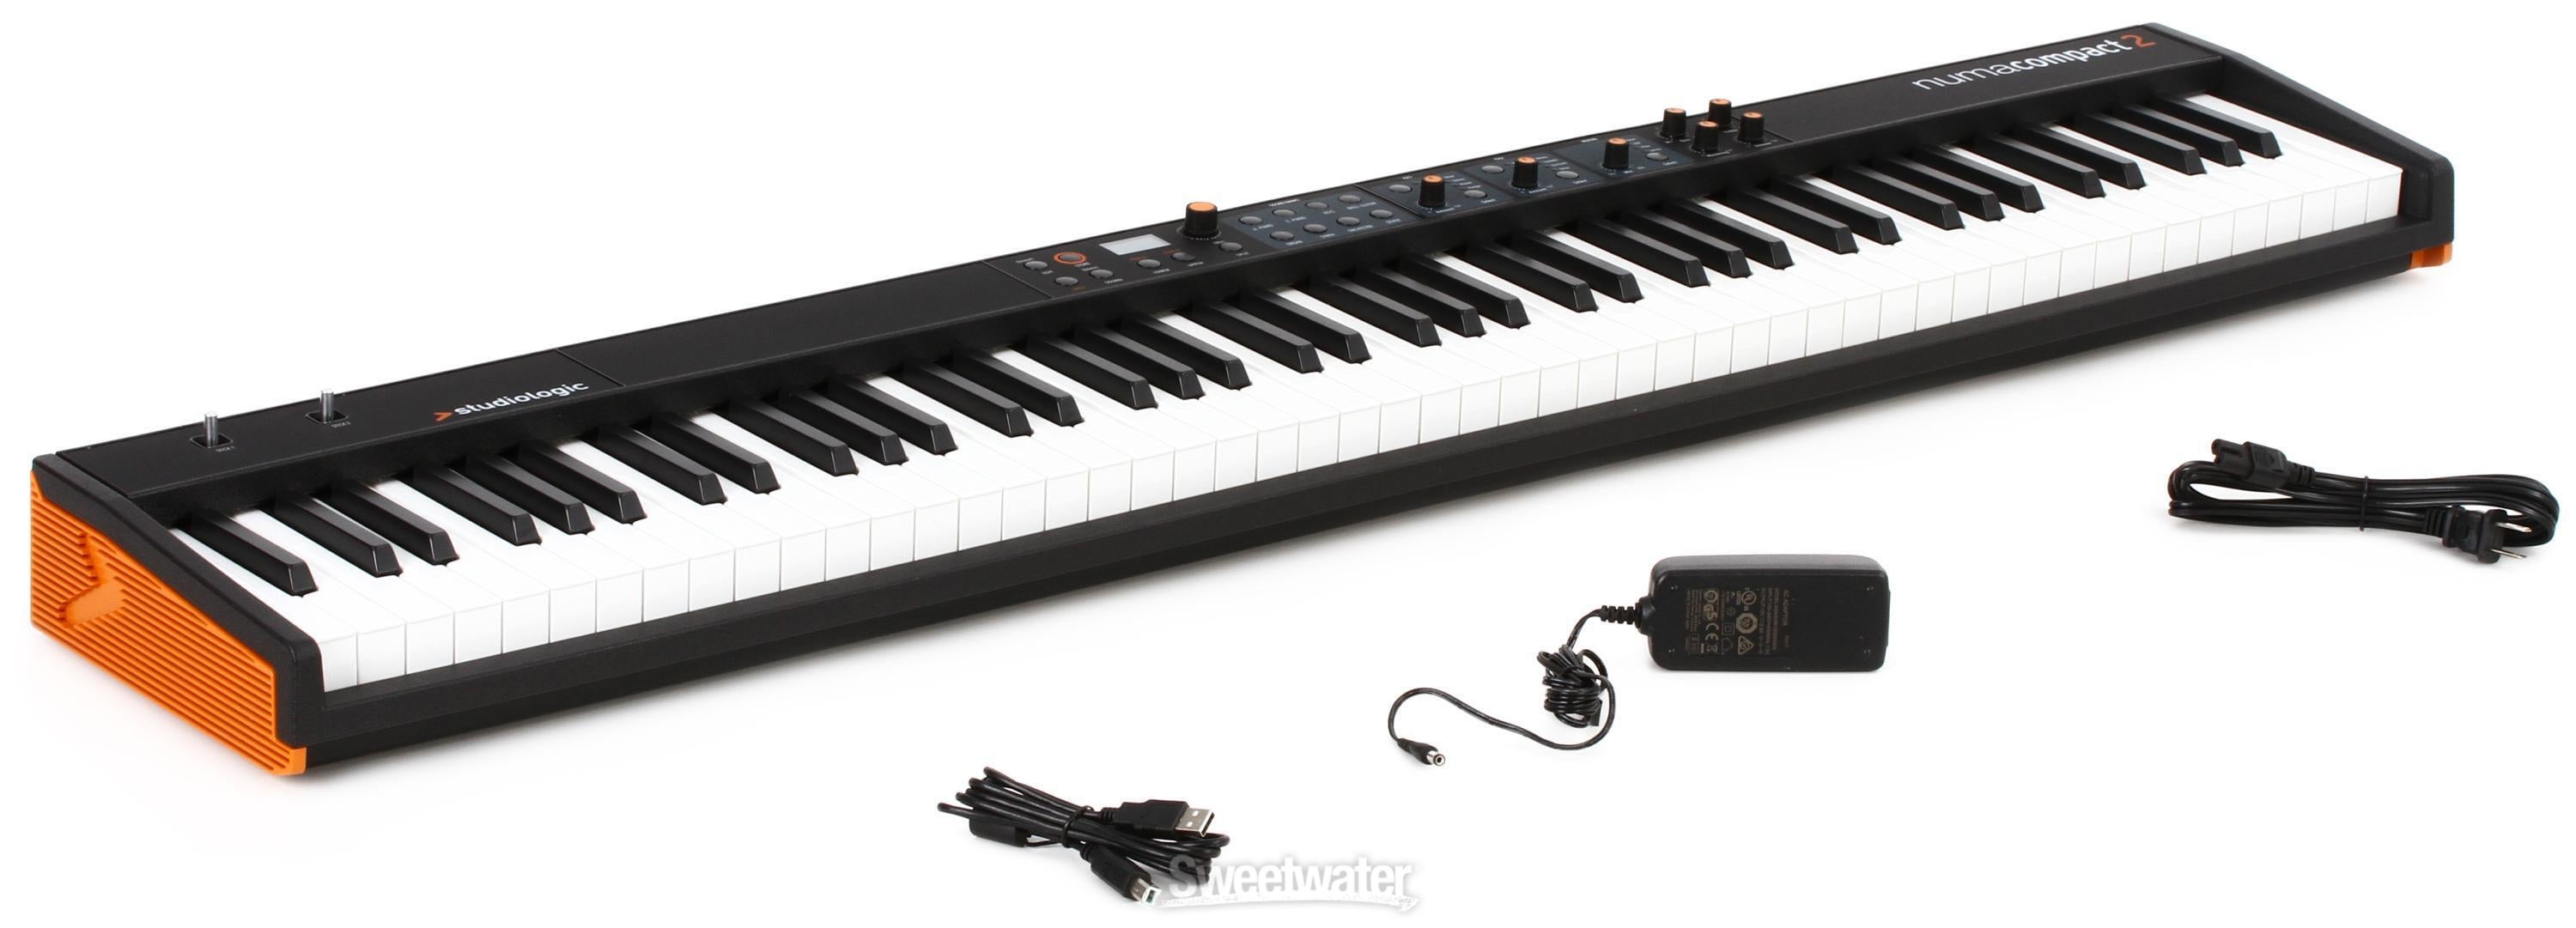 Studiologic Numa Compact 2 88-key Stage Piano | Sweetwater